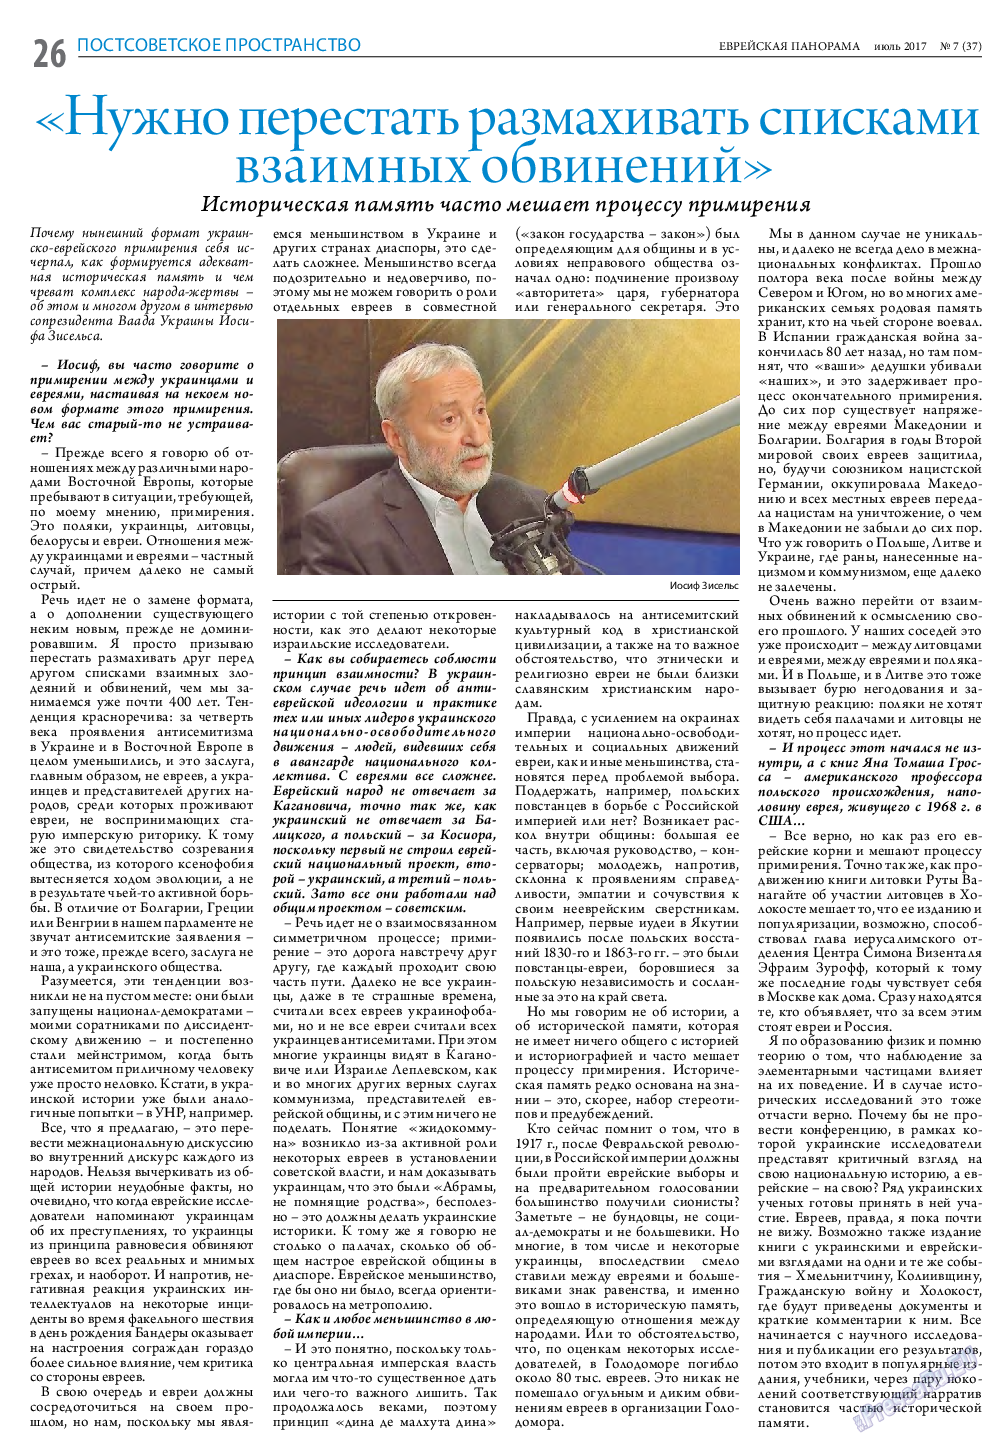 Еврейская панорама, газета. 2017 №7 стр.26